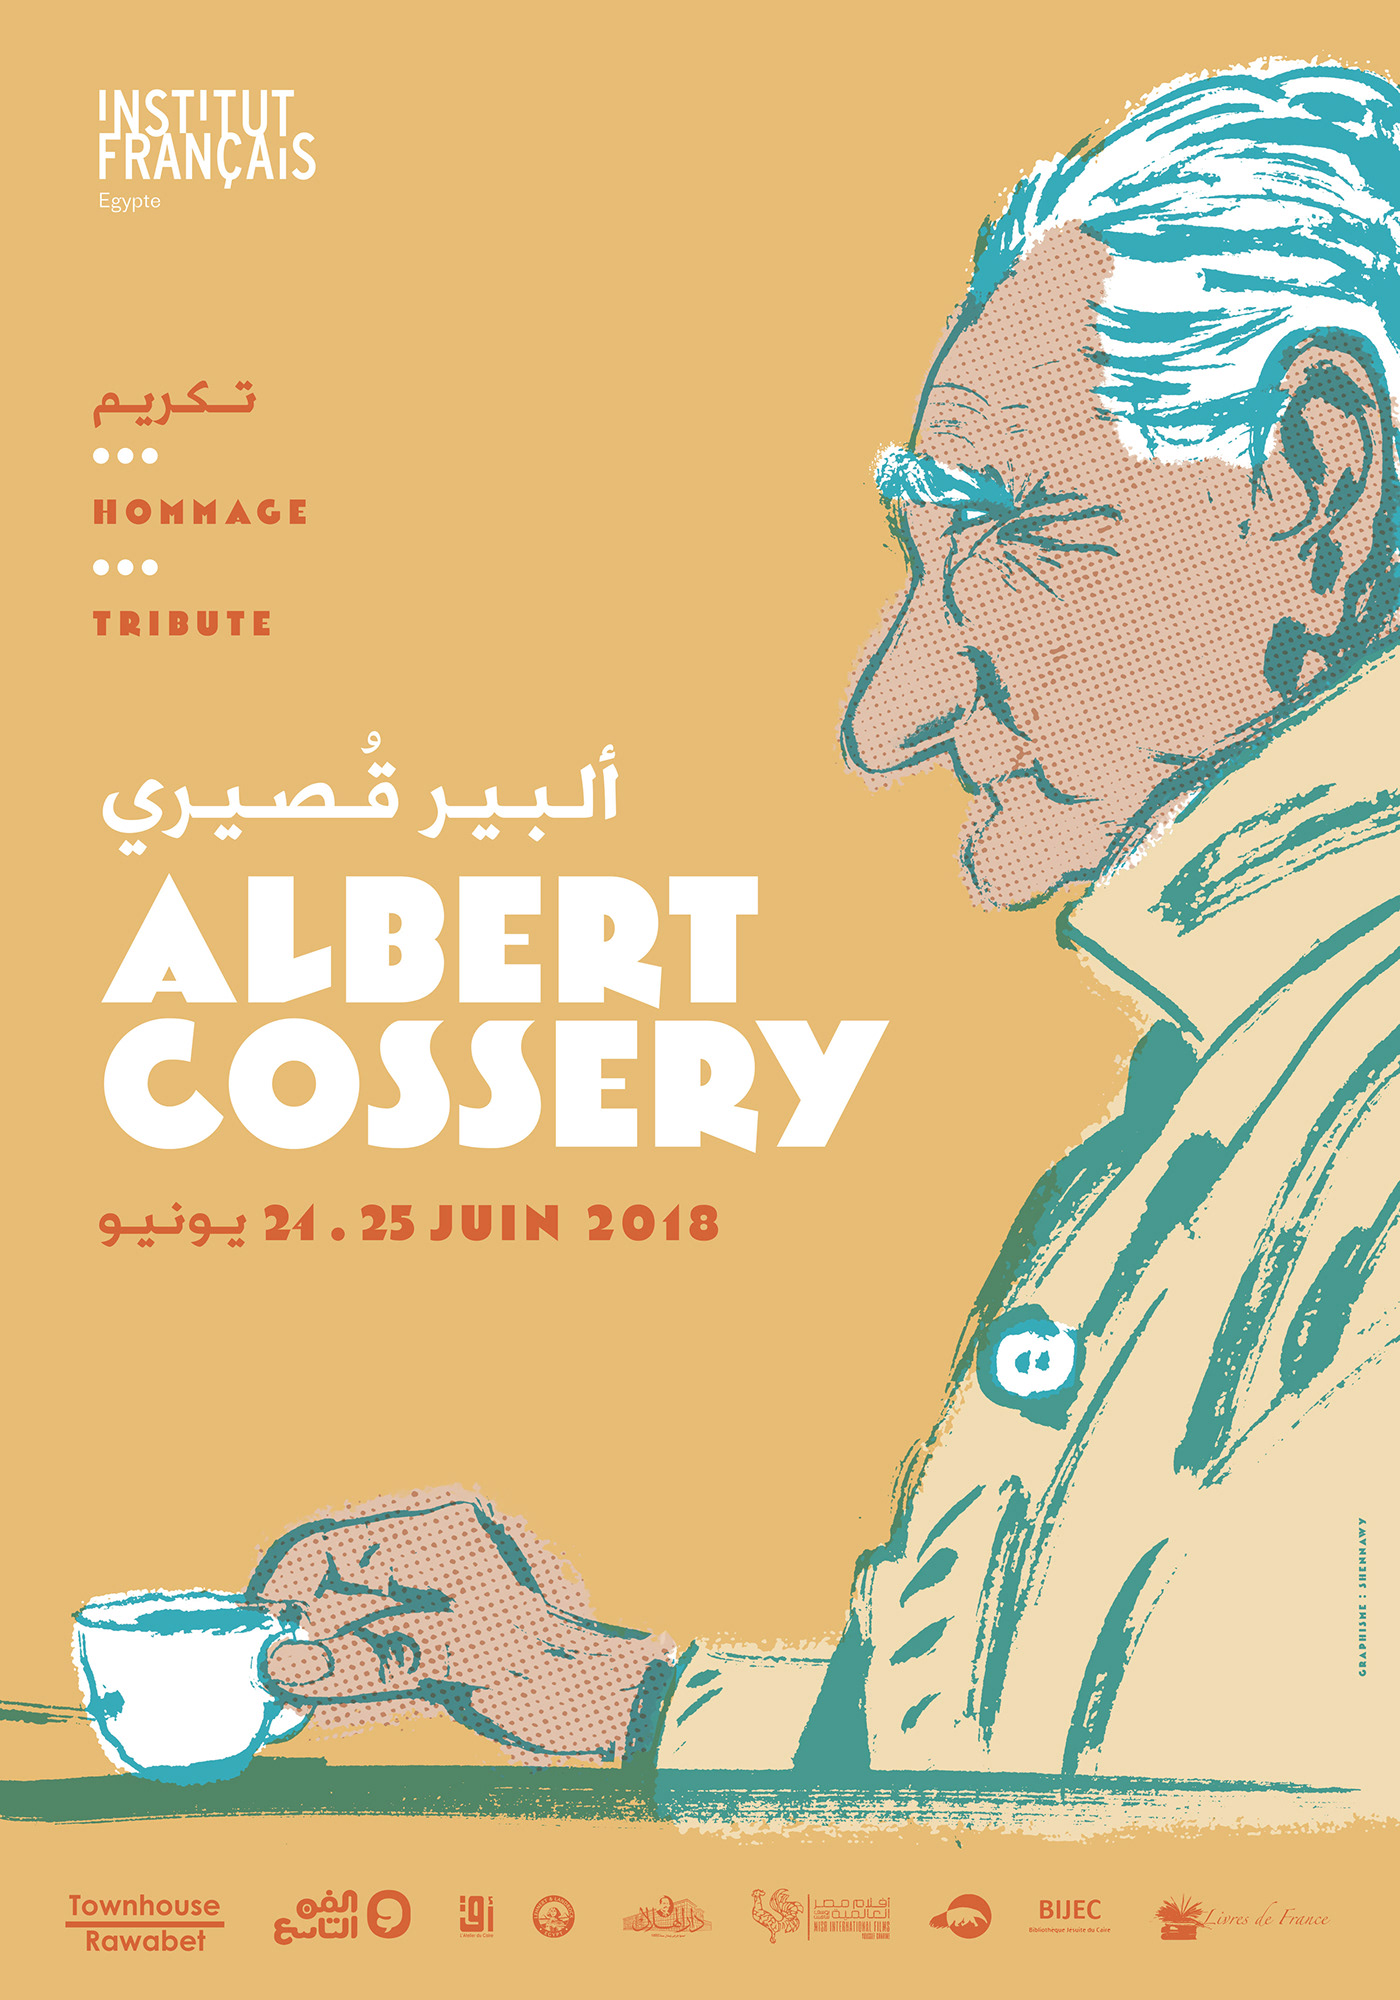 Albert Cossery Cossery shennawy cairo Egypte IFE Egypte